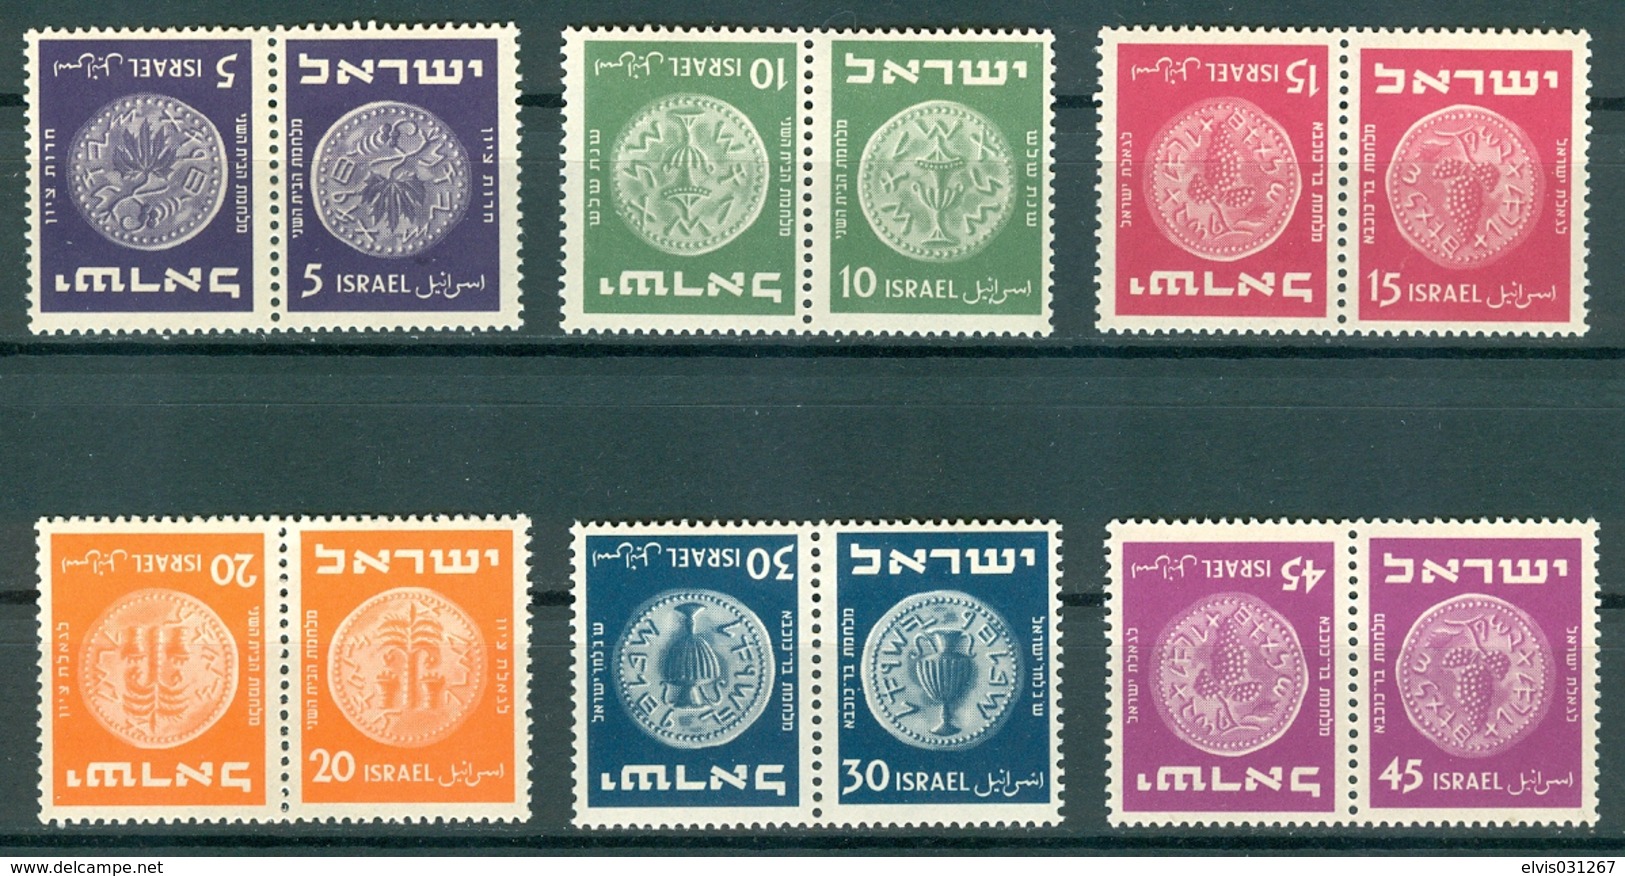 Israel - 1950, Michel/Philex No. : 42-50, 3rd Coinage, - MNH - TETE BECHE PAIRS - Full Tab - Ungebraucht (mit Tabs)